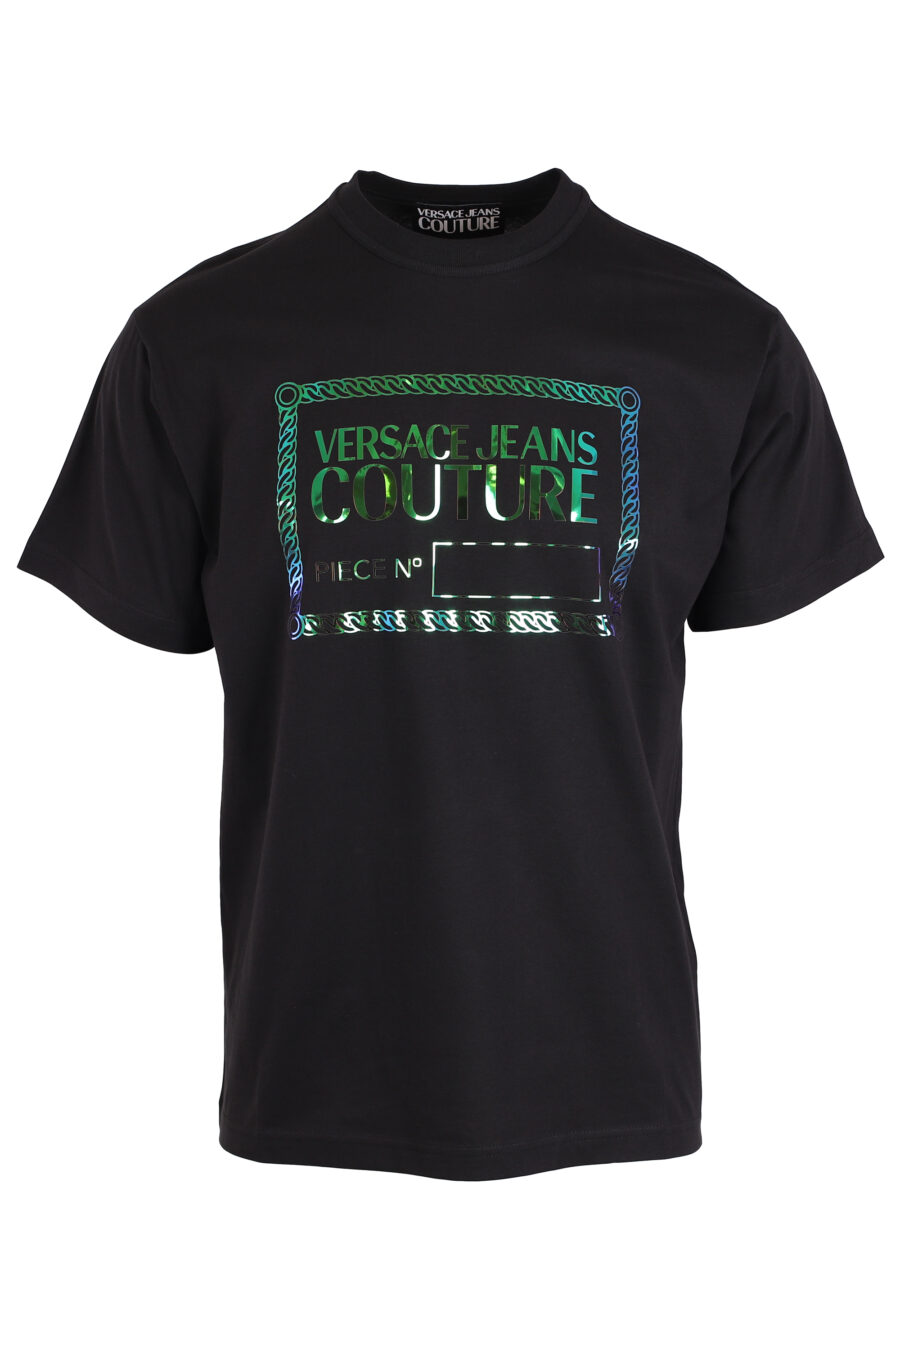 Camiseta negra con logo cuadrado centro tornasol verde - IMG 3987